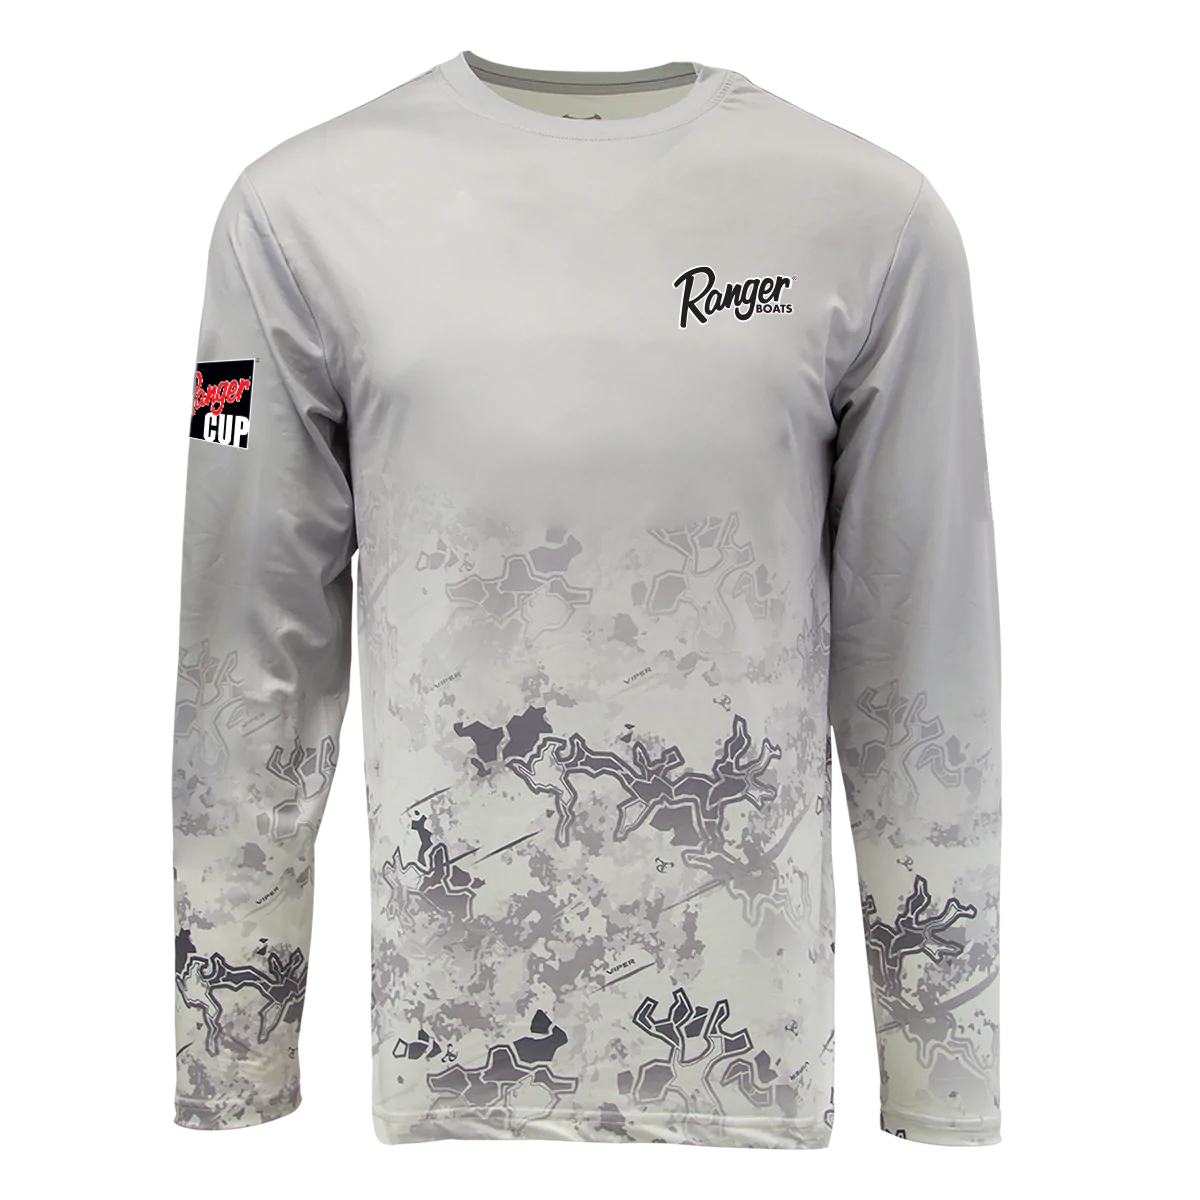 Ranger Cup LS Viper Snow Performance Shirt